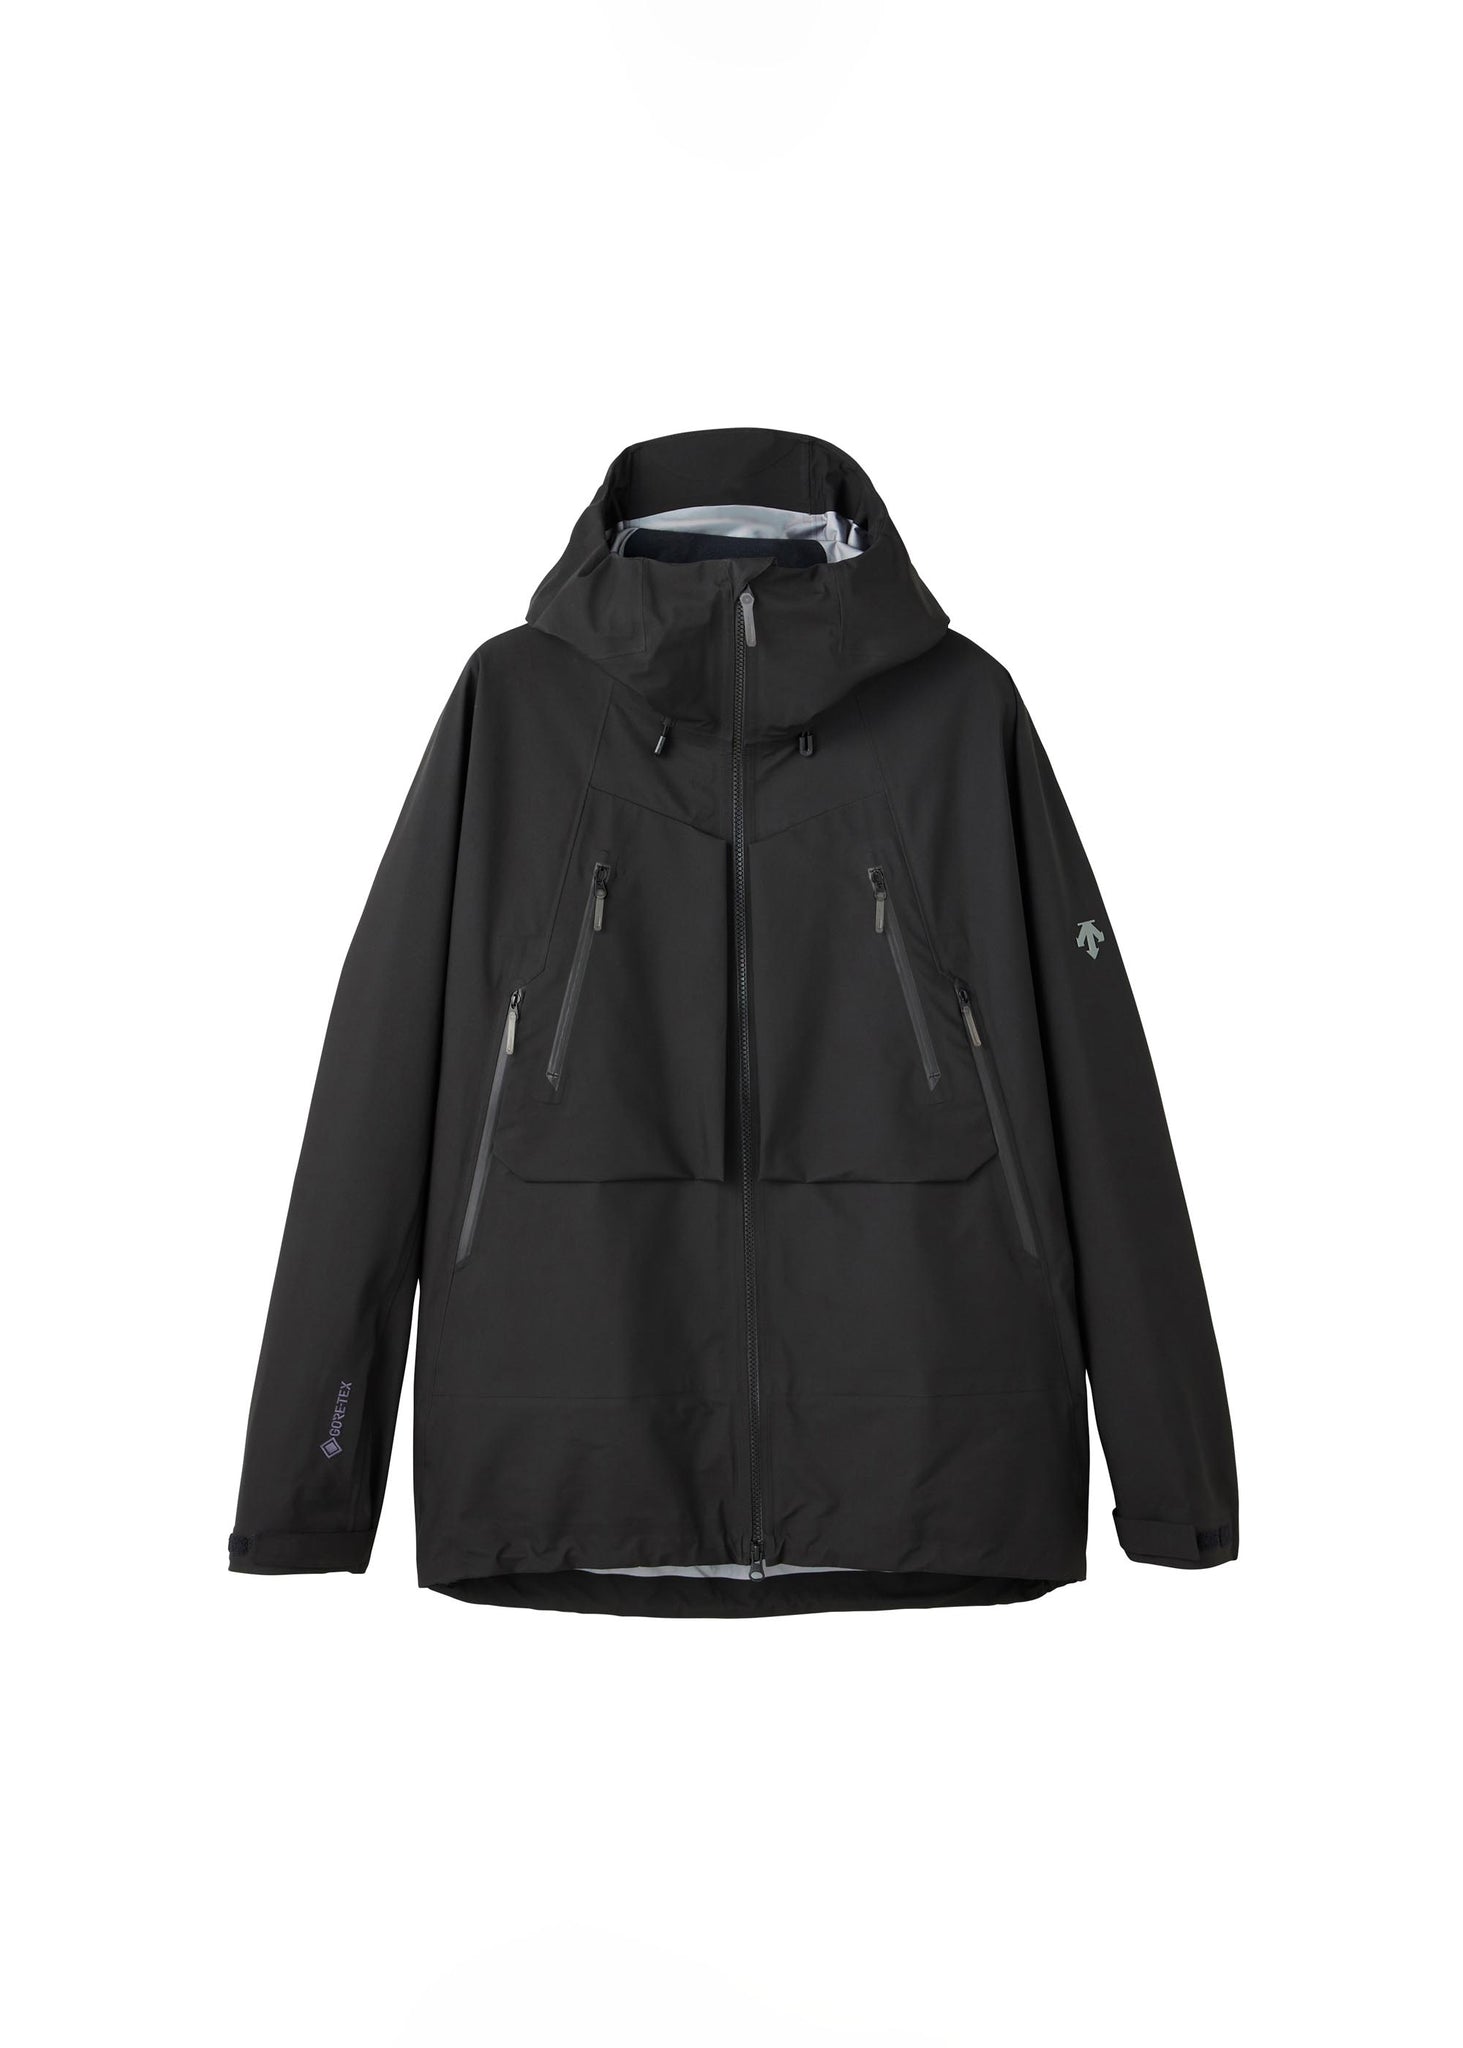 Black GORE-TEX Shell Jacket